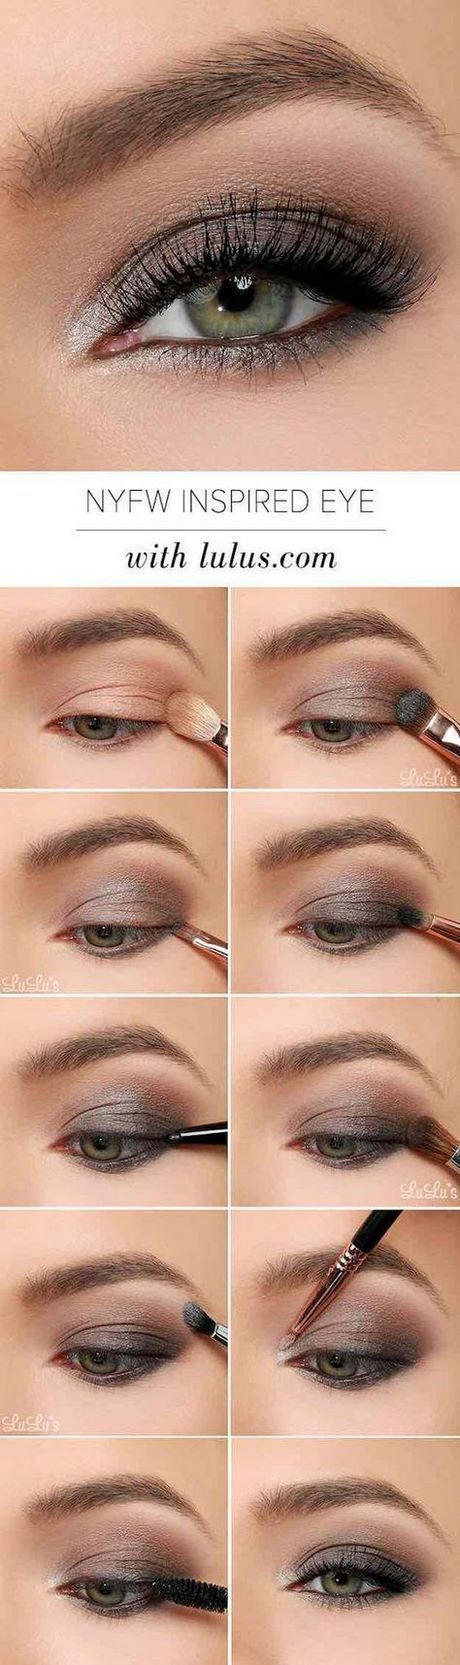 green-eye-makeup-tutorial-pinterest-11_16 Groene ogen make-up tutorial pinterest